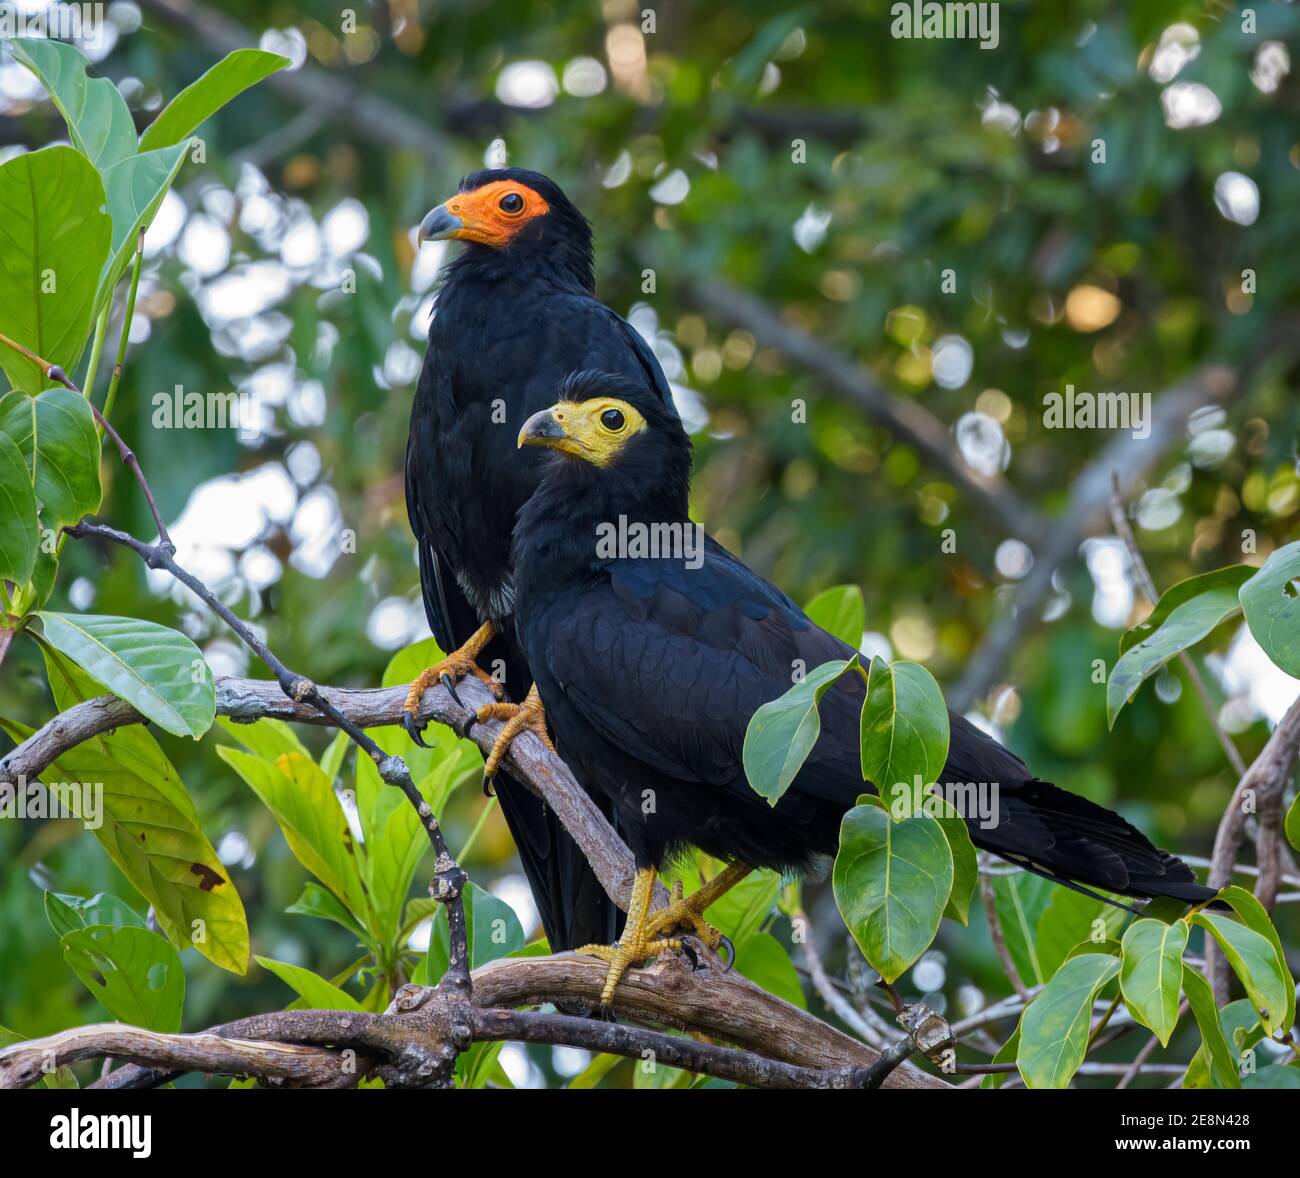 Adult and Juvenile black caracaras (Daptrius ater) in a jungle setting Stock Photo